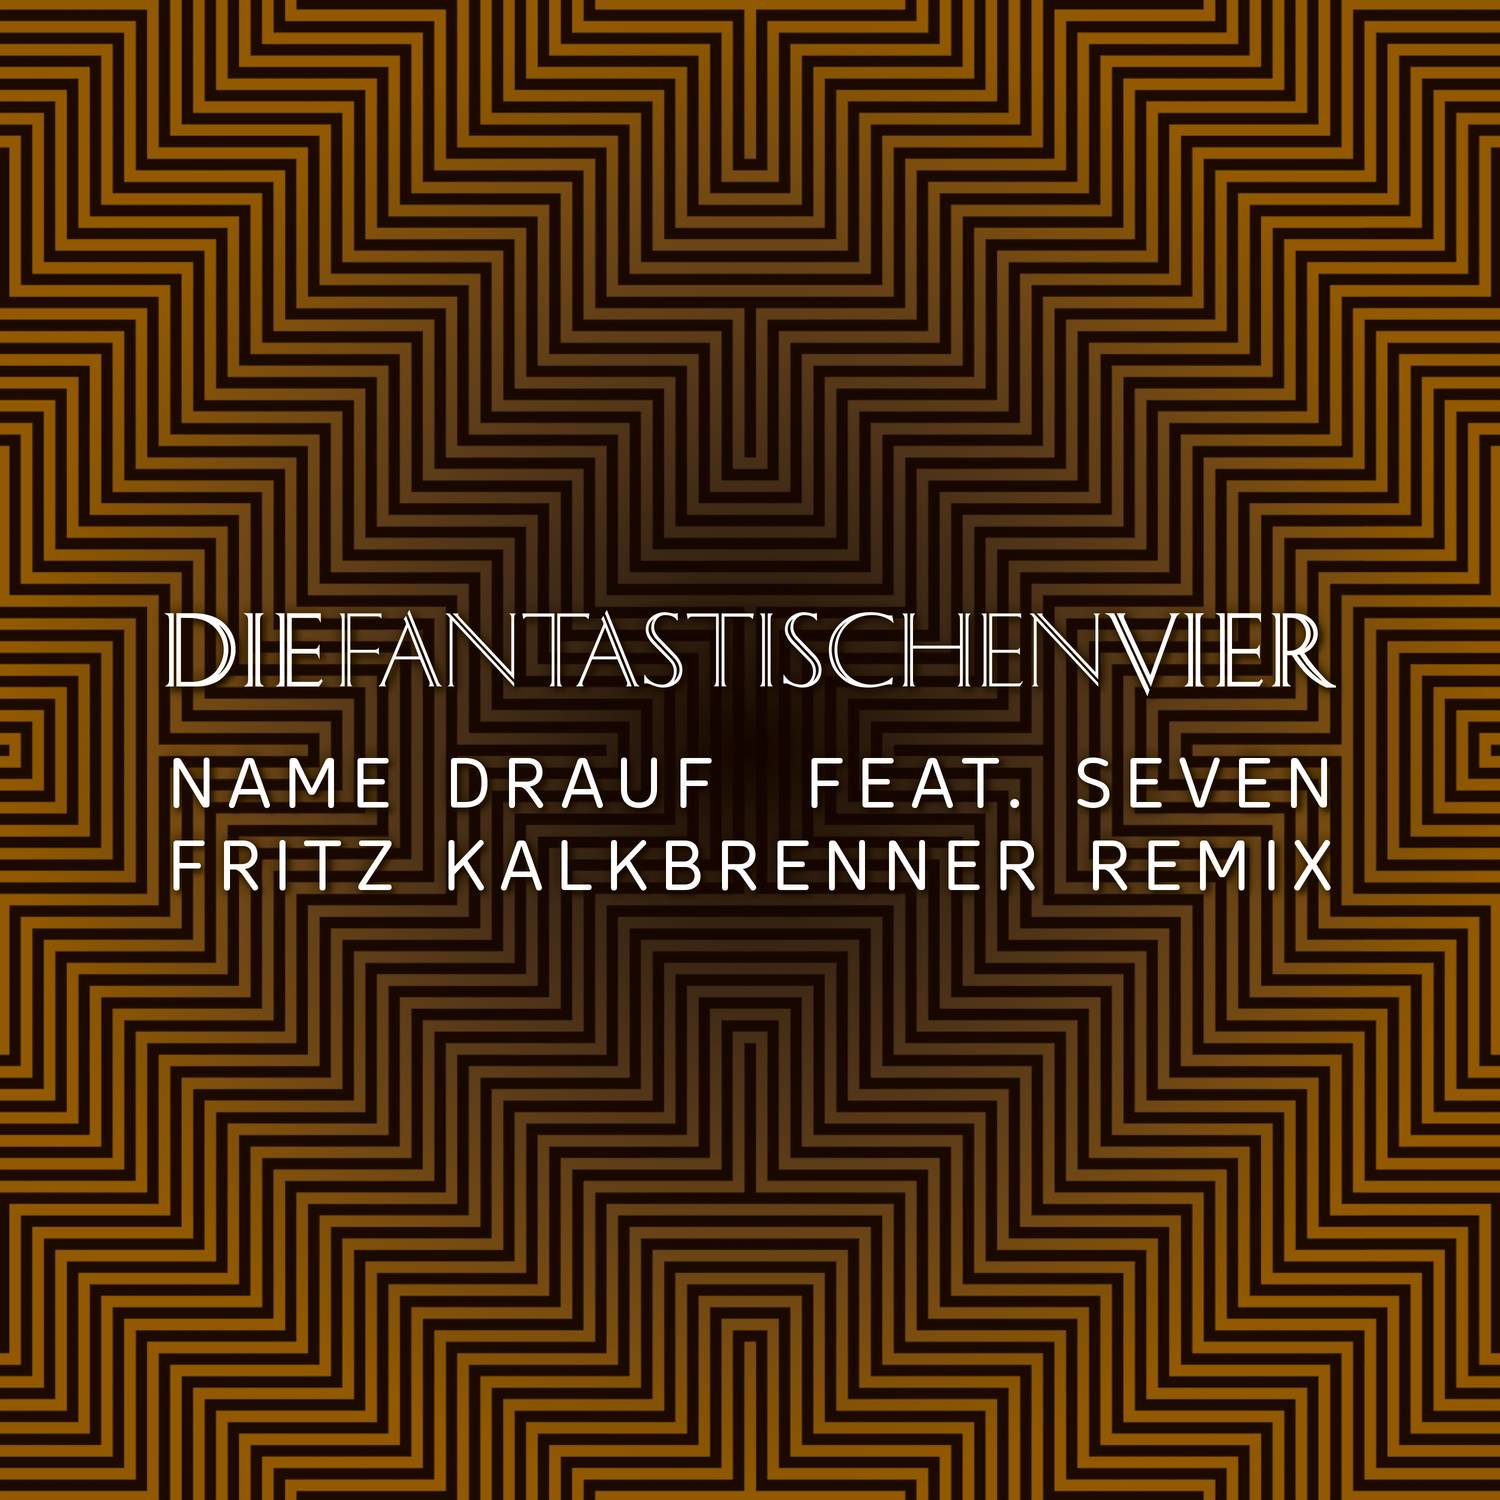 Name drauf (Fritz Kalkbrenner Remix)